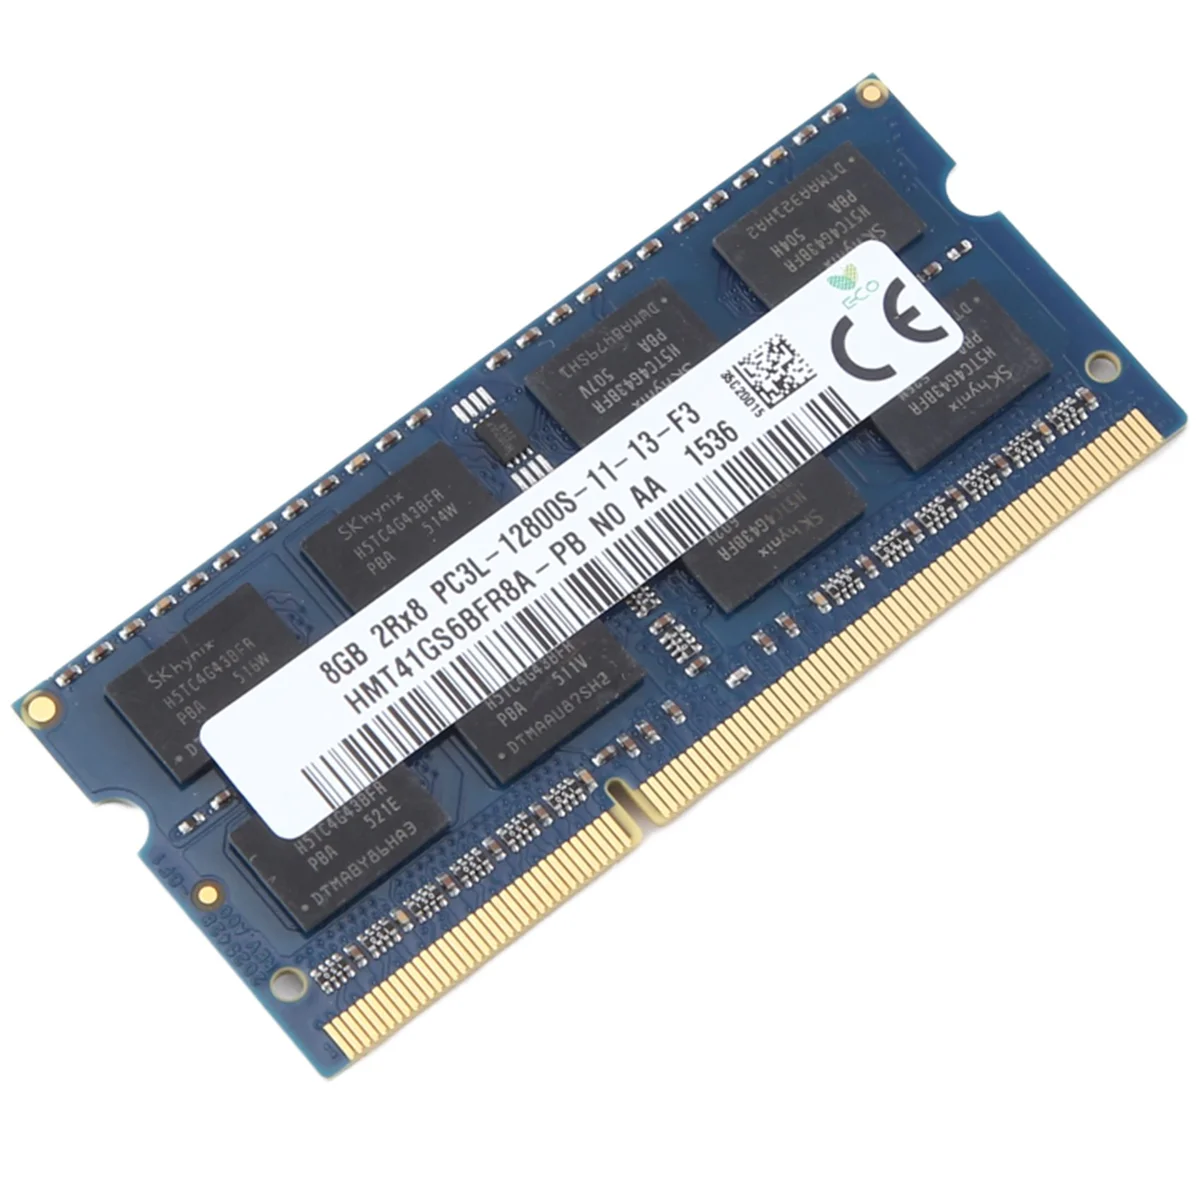 For SK Hynix 8GB DDR3 Laptop Ram Memory 2RX8 1600Mhz PC3-12800 204 Pins 1.35V SODIMM for Laptop Memory Ram kingston hyperx ram memory ddr3 8gb 4gb 1600mhz 1866mhz ram ddr3 8 gb pc3 12800 desktop memory for gaming dimm